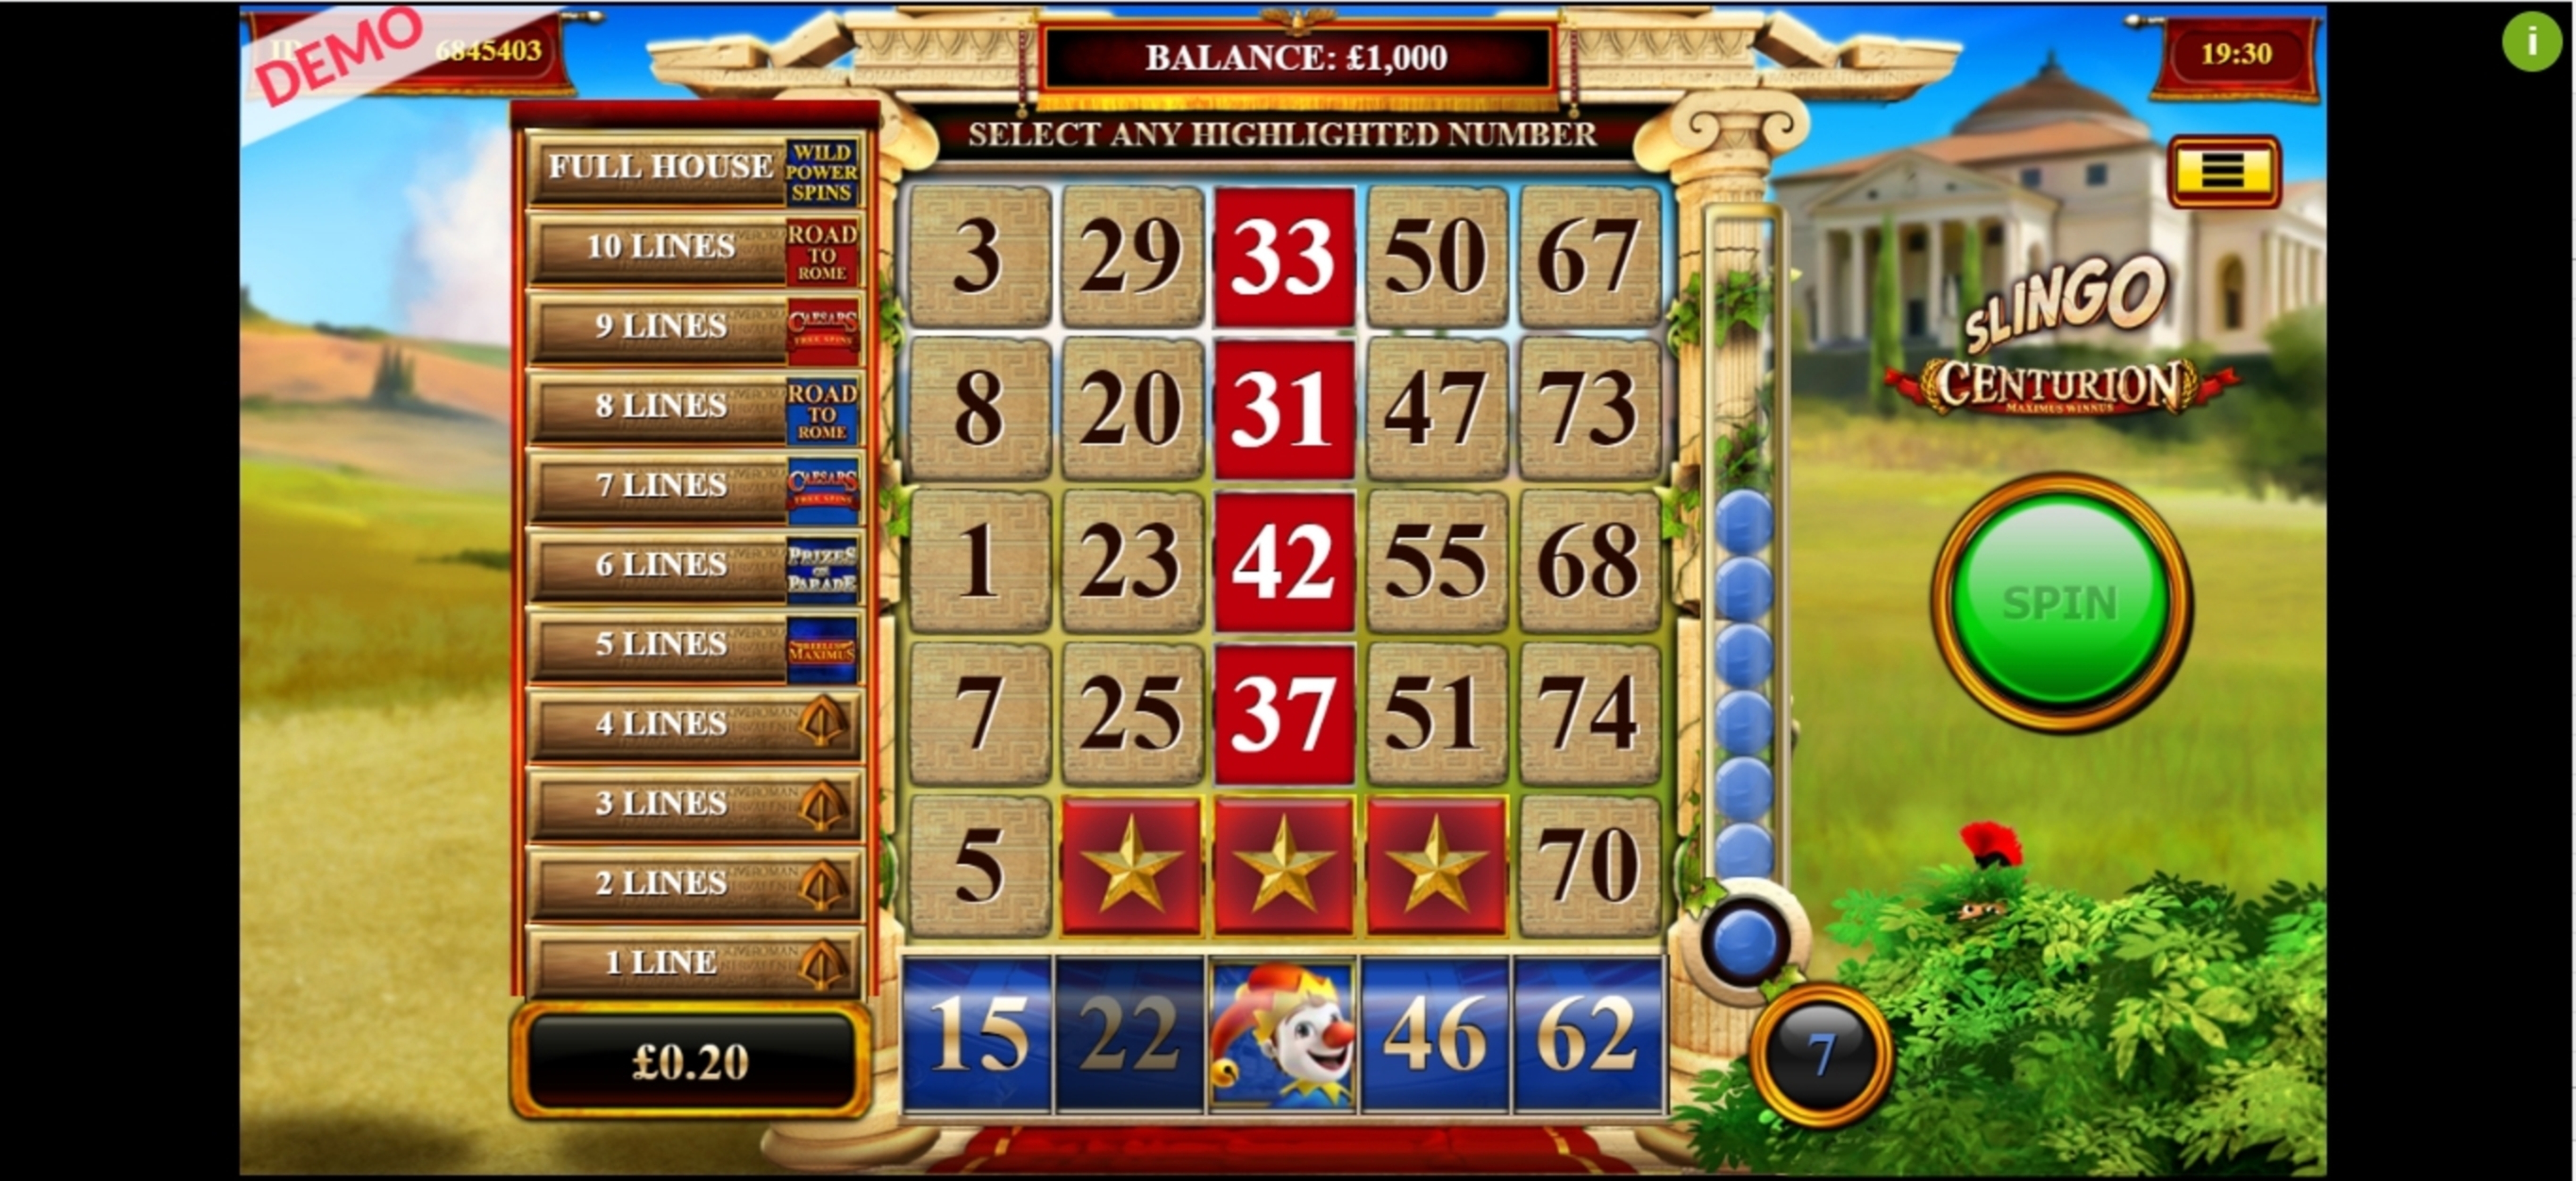 Win Money in Slingo Centurion Free Slot Game by Slingo